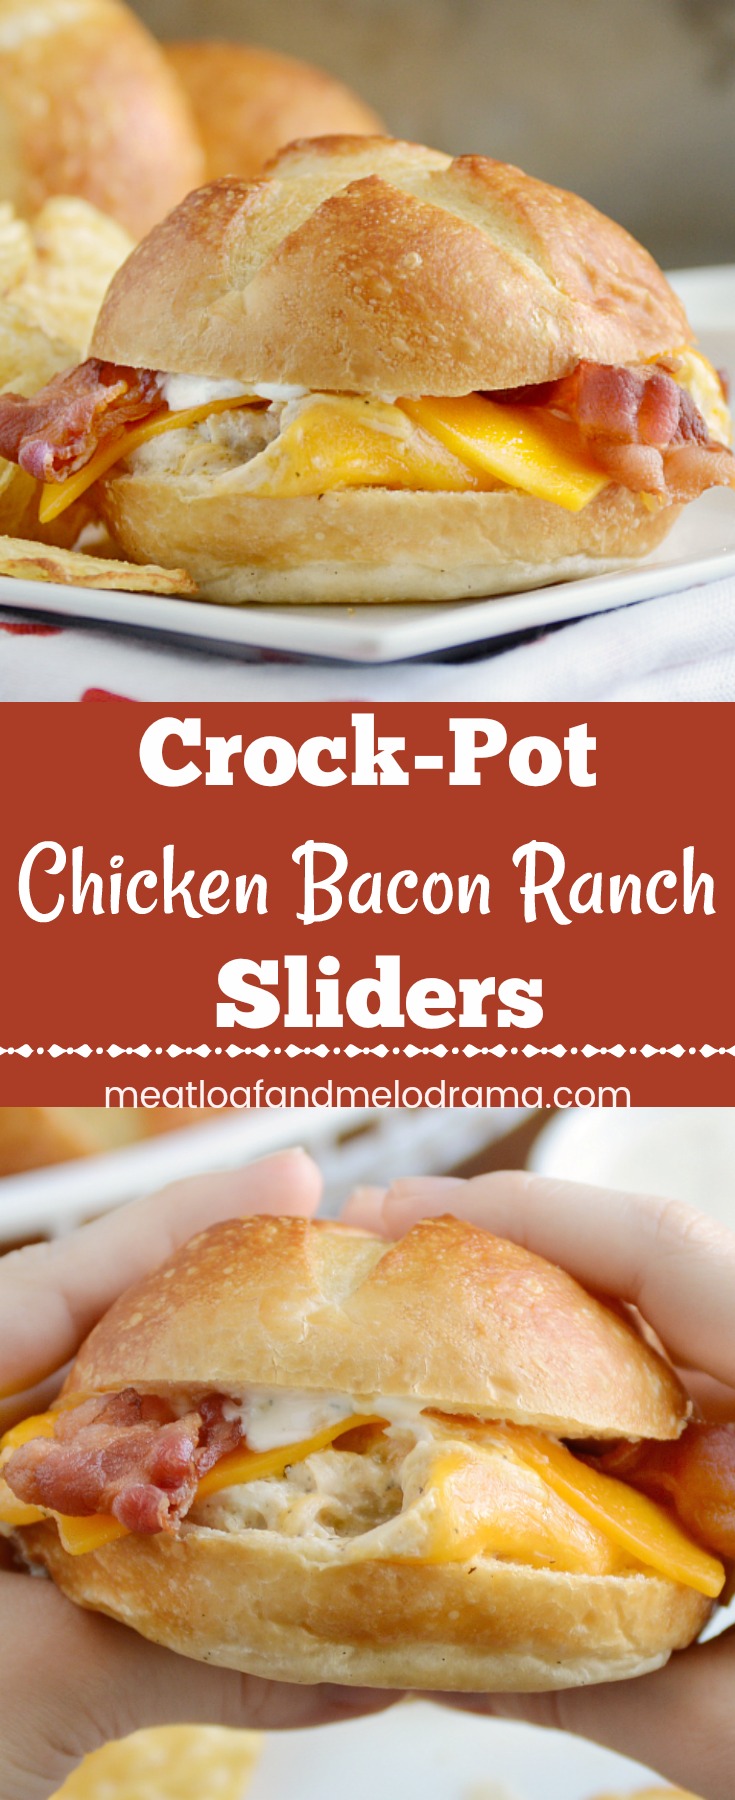 Crock-Pot Chicken Bacon Ranch Sliders